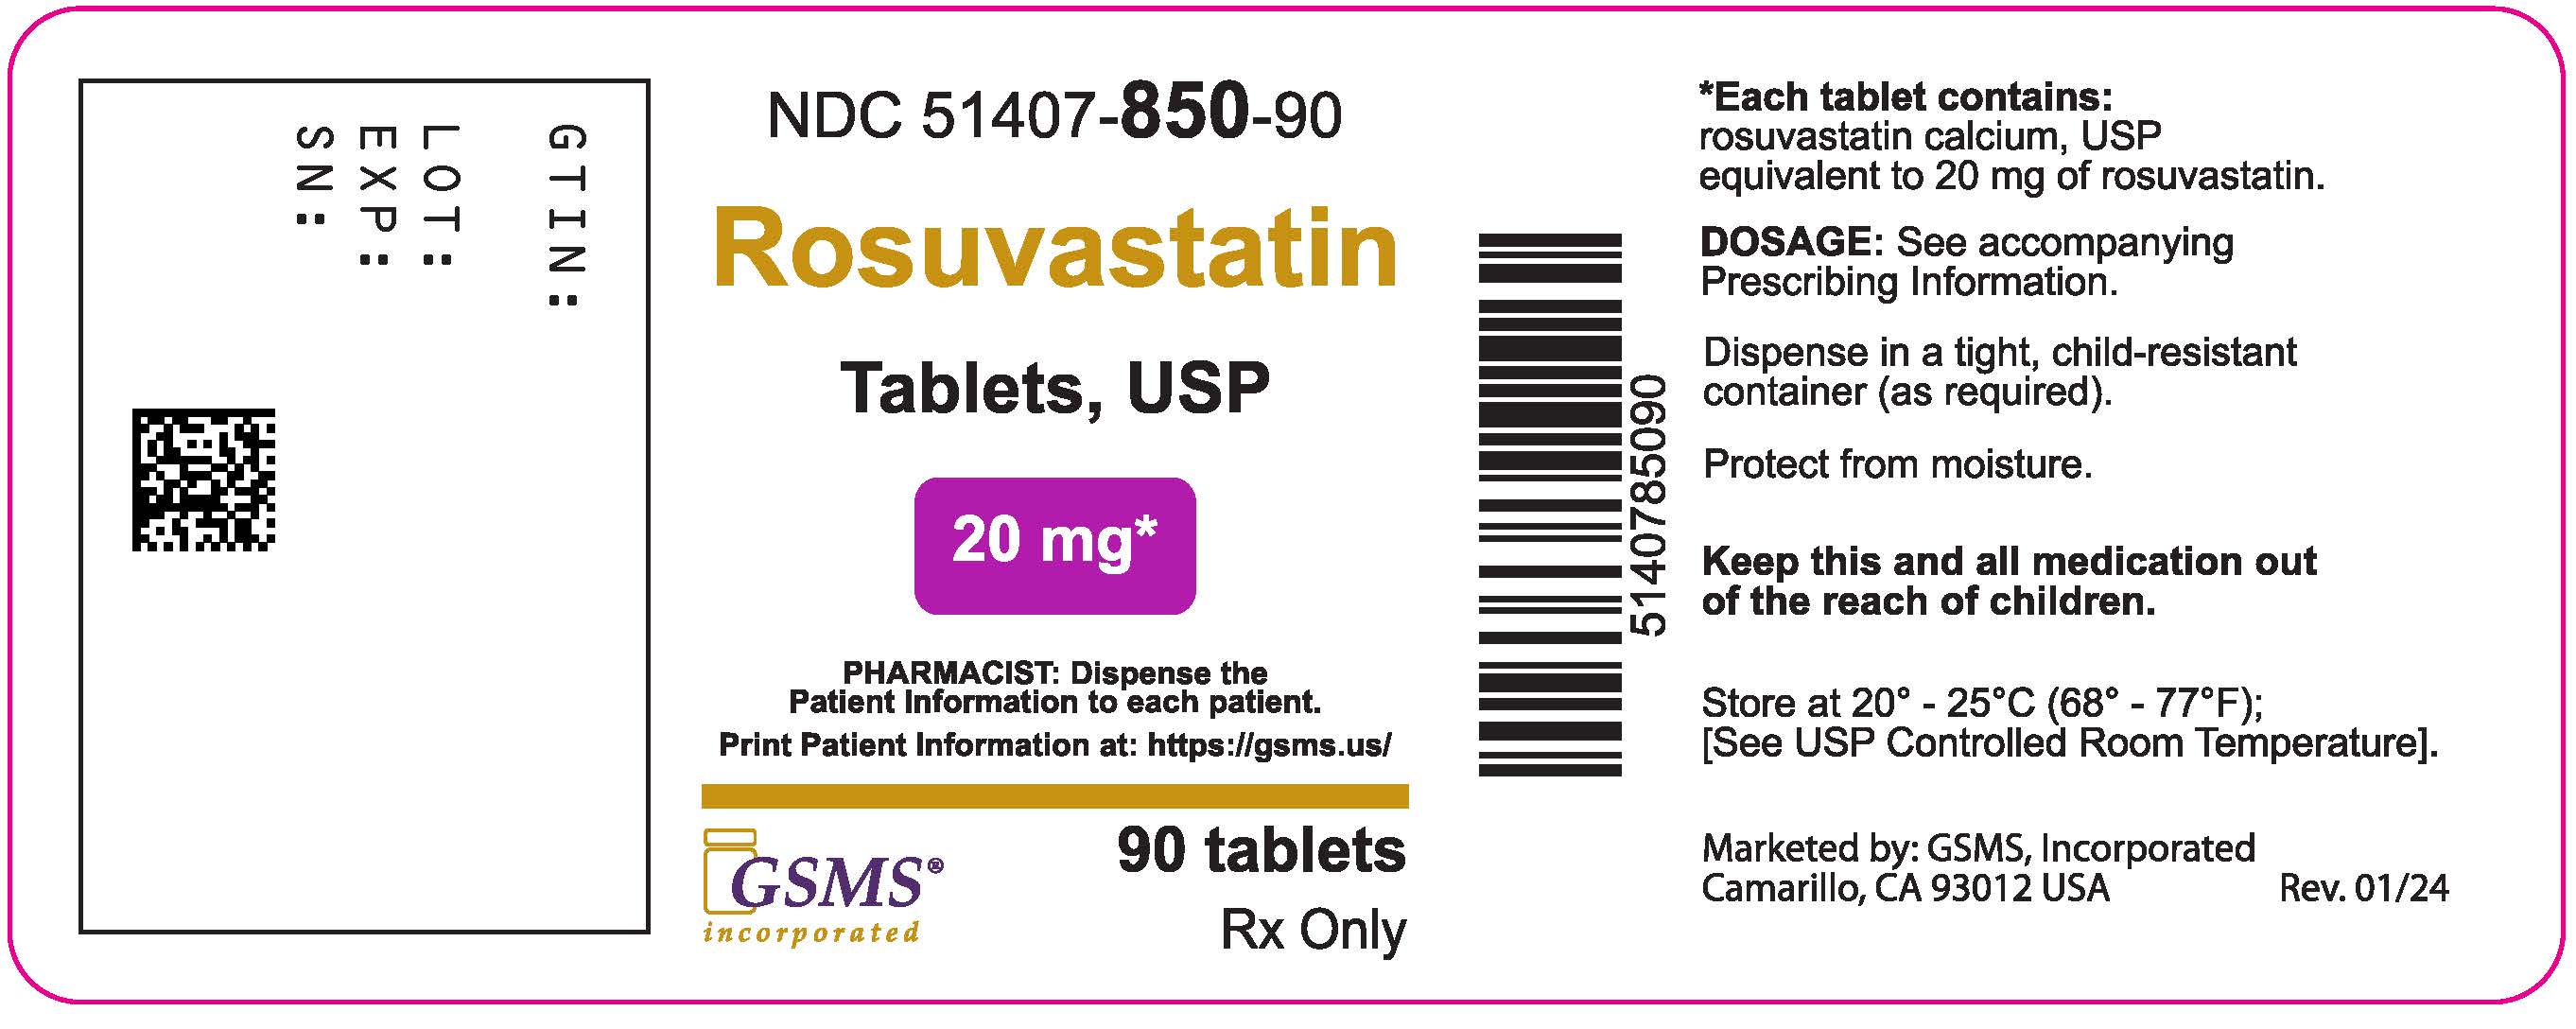 51407-850-90LB - Rosuvastatin - Rev. 0124.jpg